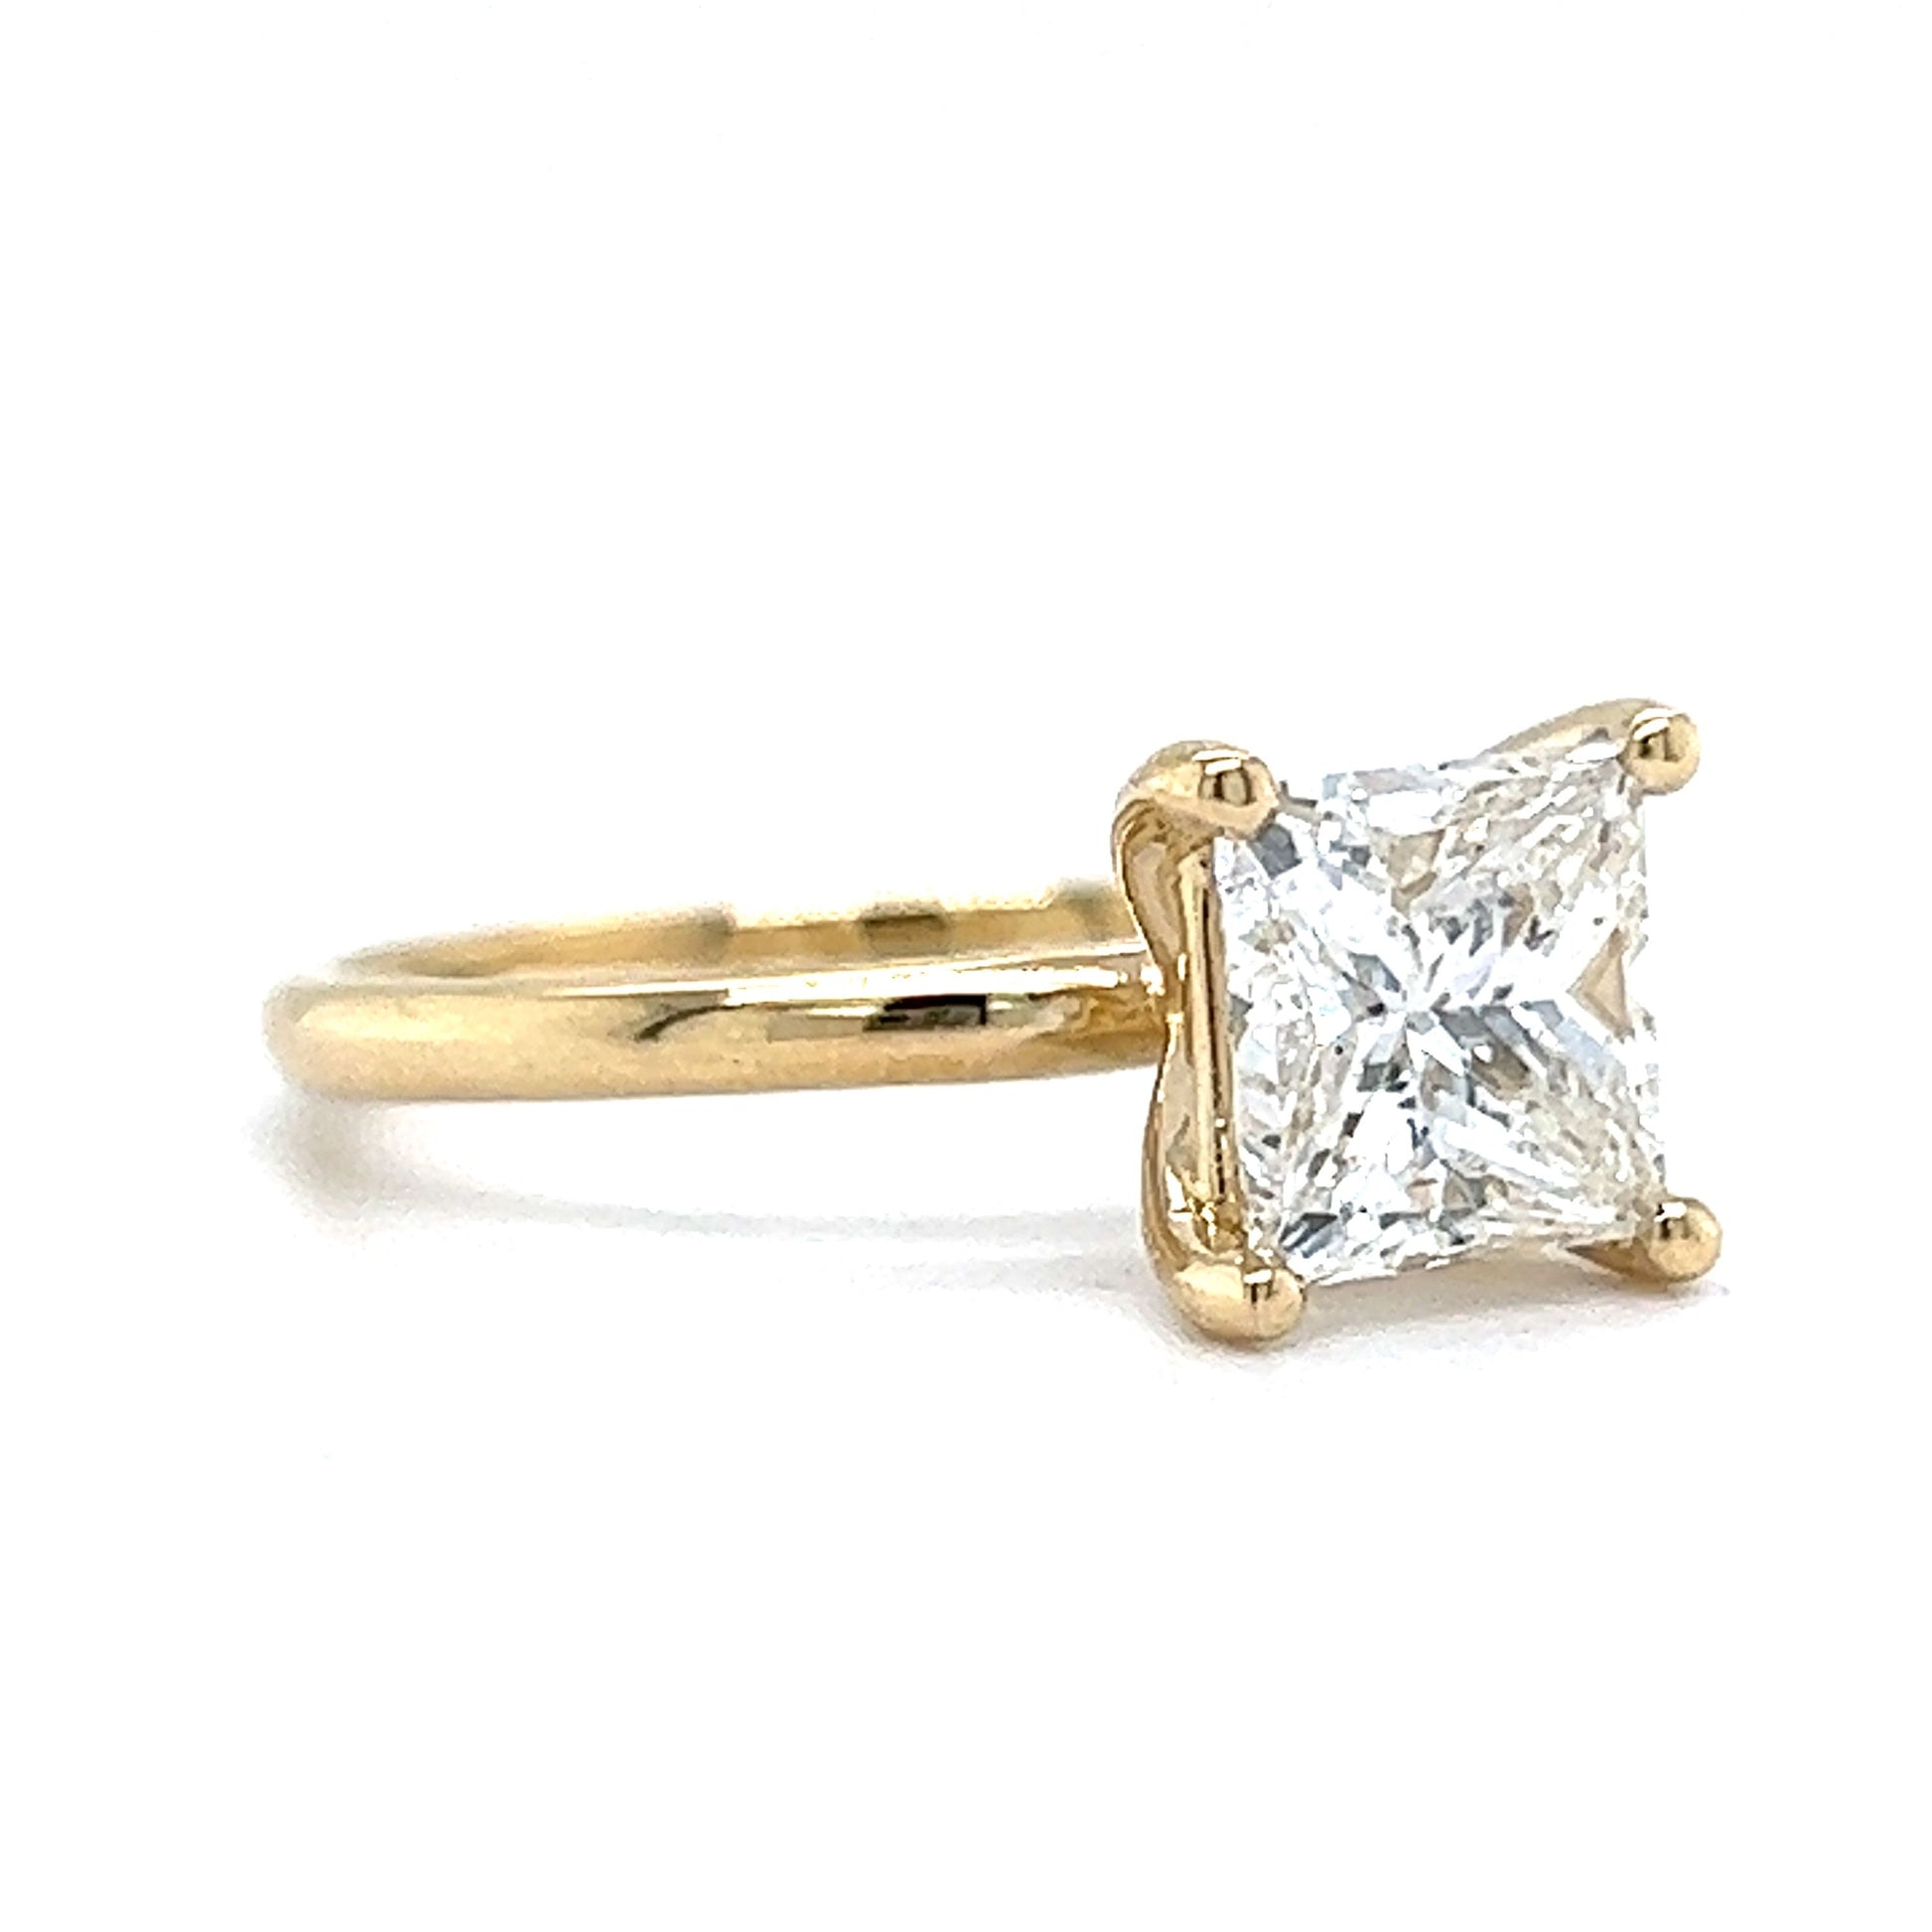 2.01 Princess Cut Diamond Engagement Ring in 14k Yellow Gold